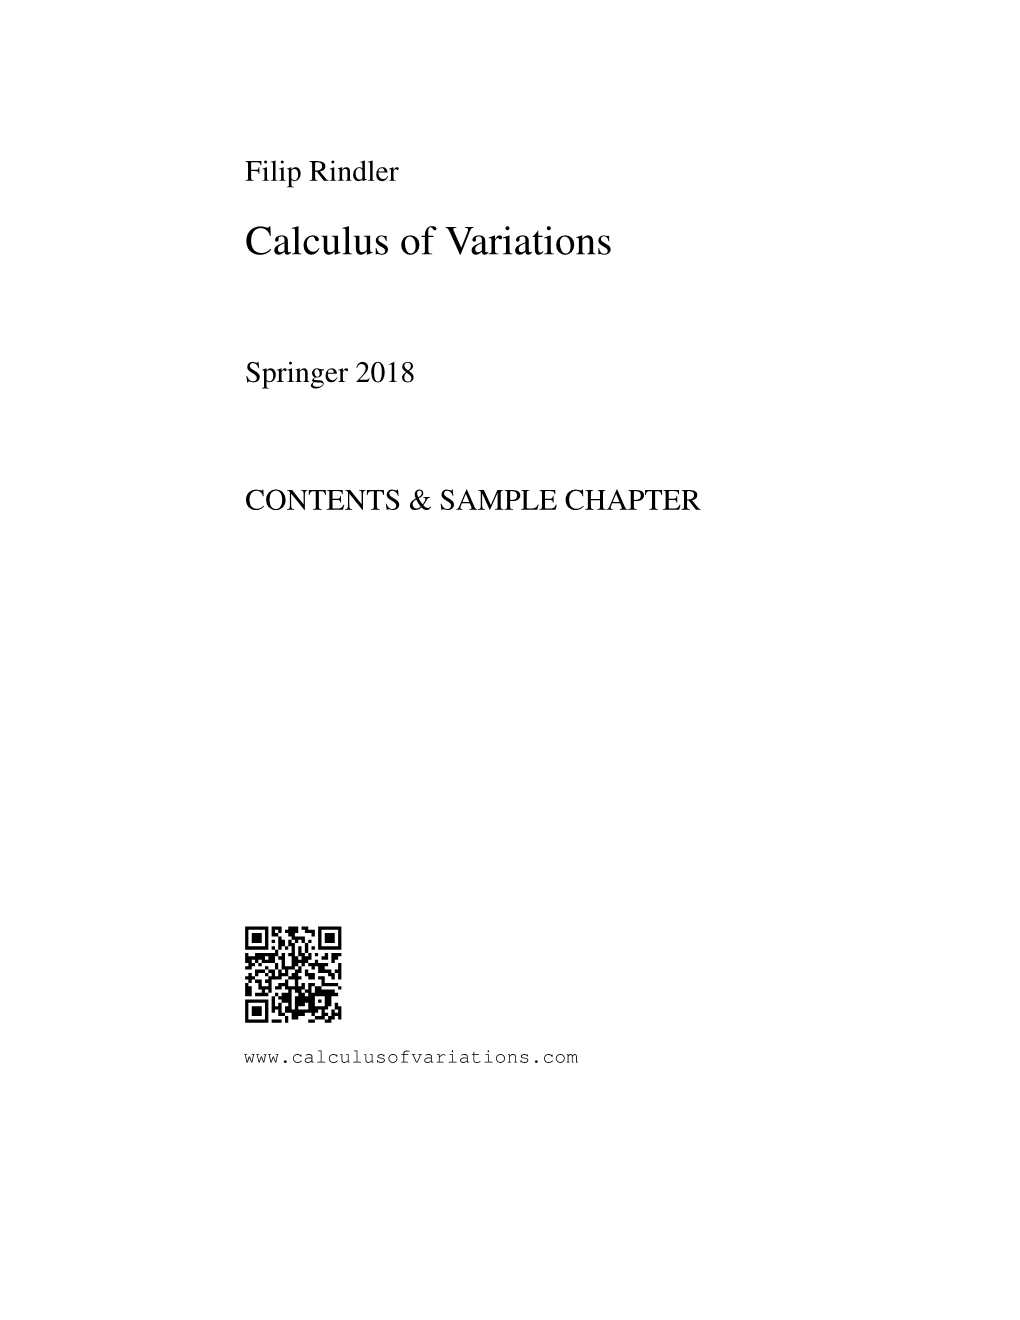 Filip Rindler Calculus of Variations